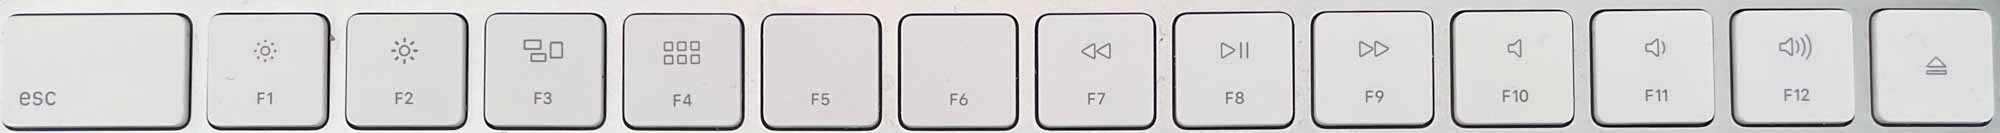 Новая клавиатура Mac Magic Keyboard: что мы хочу увидеть - Touch ID